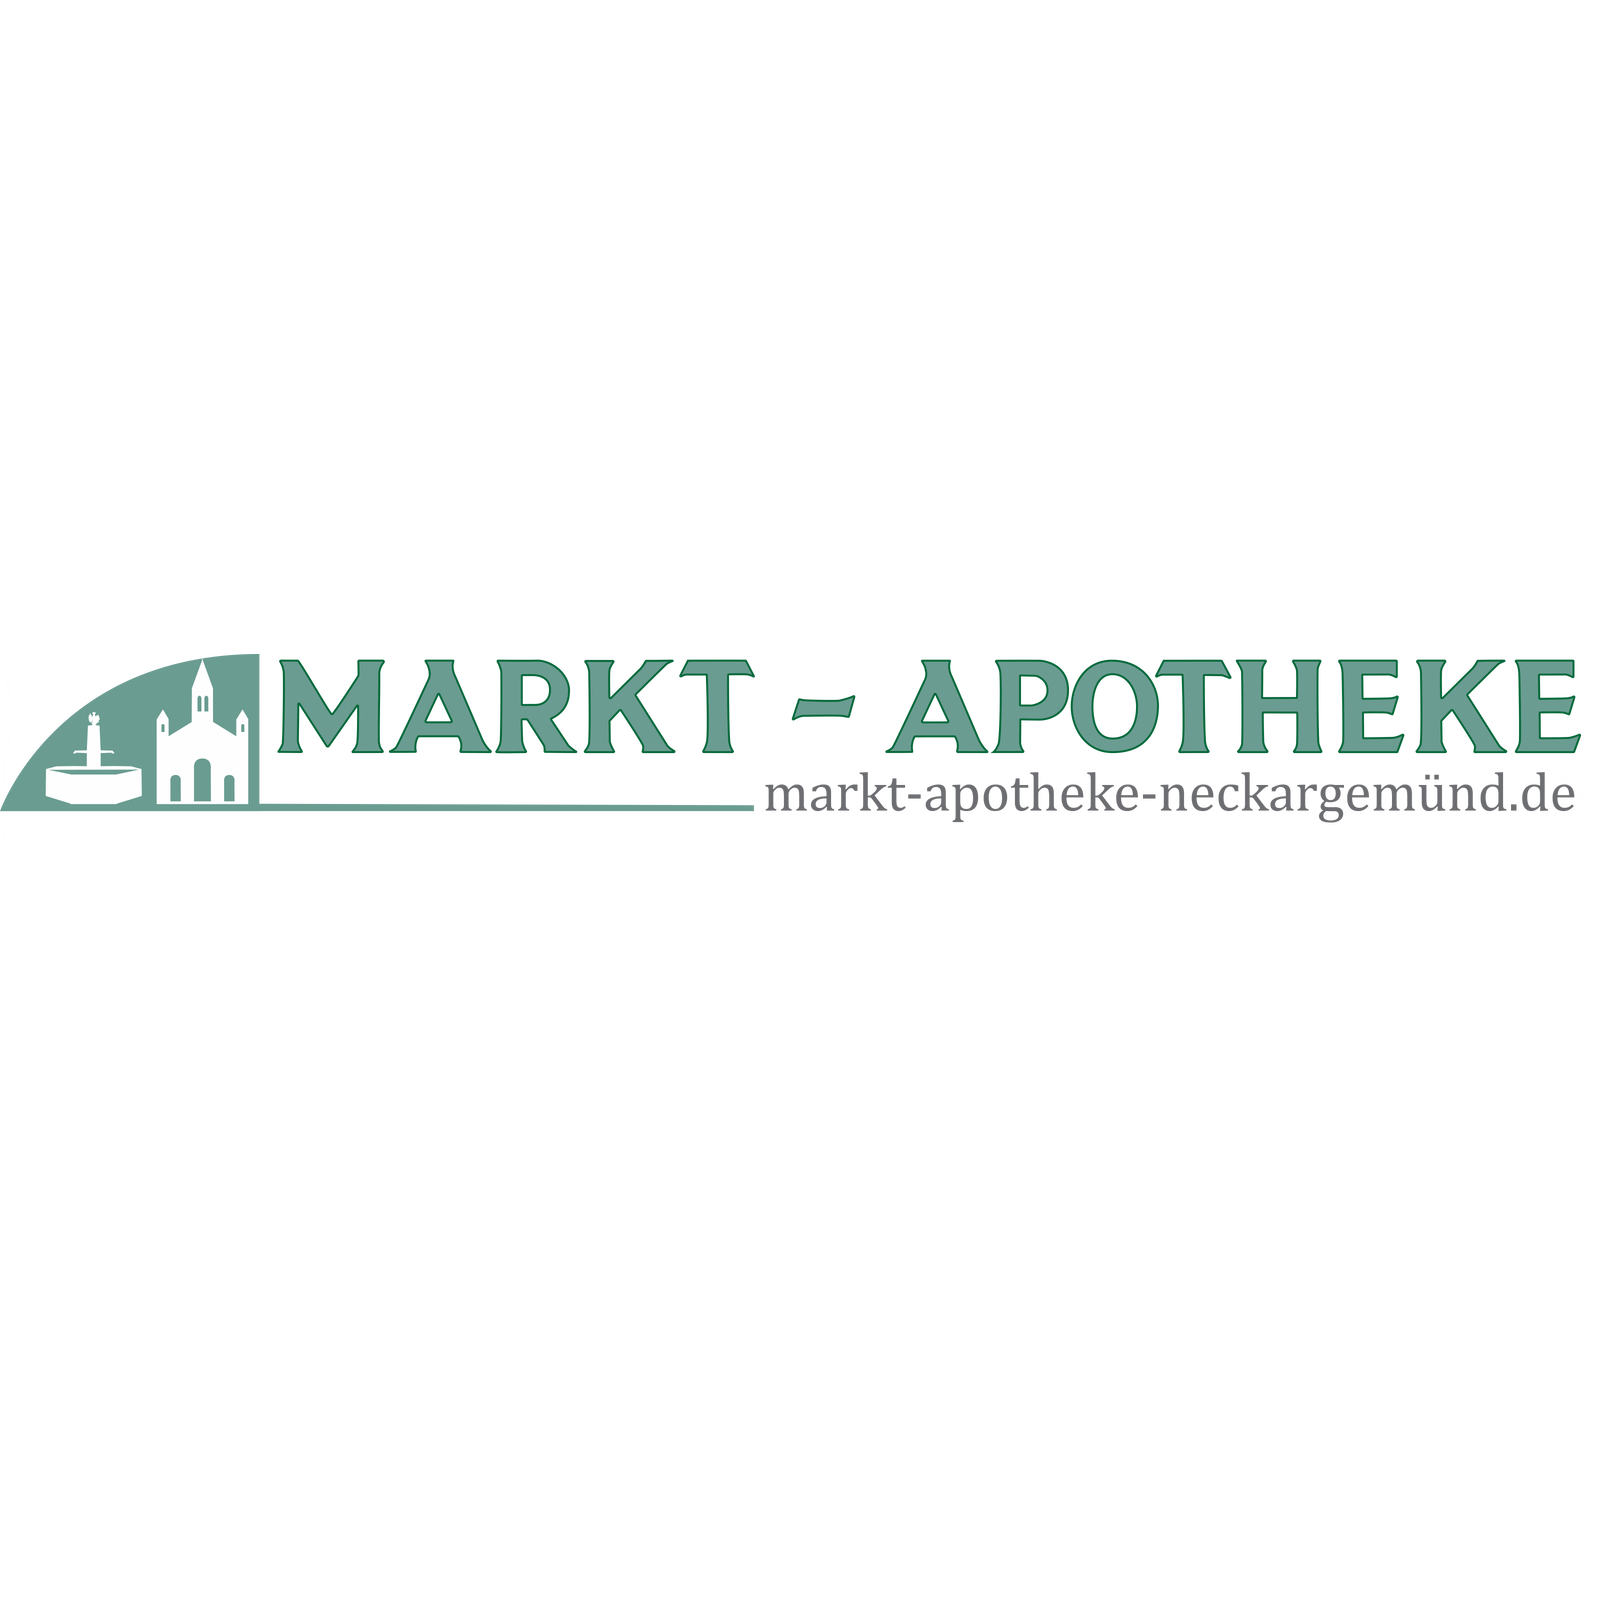 Markt-Apotheke in Neckargemünd - Logo